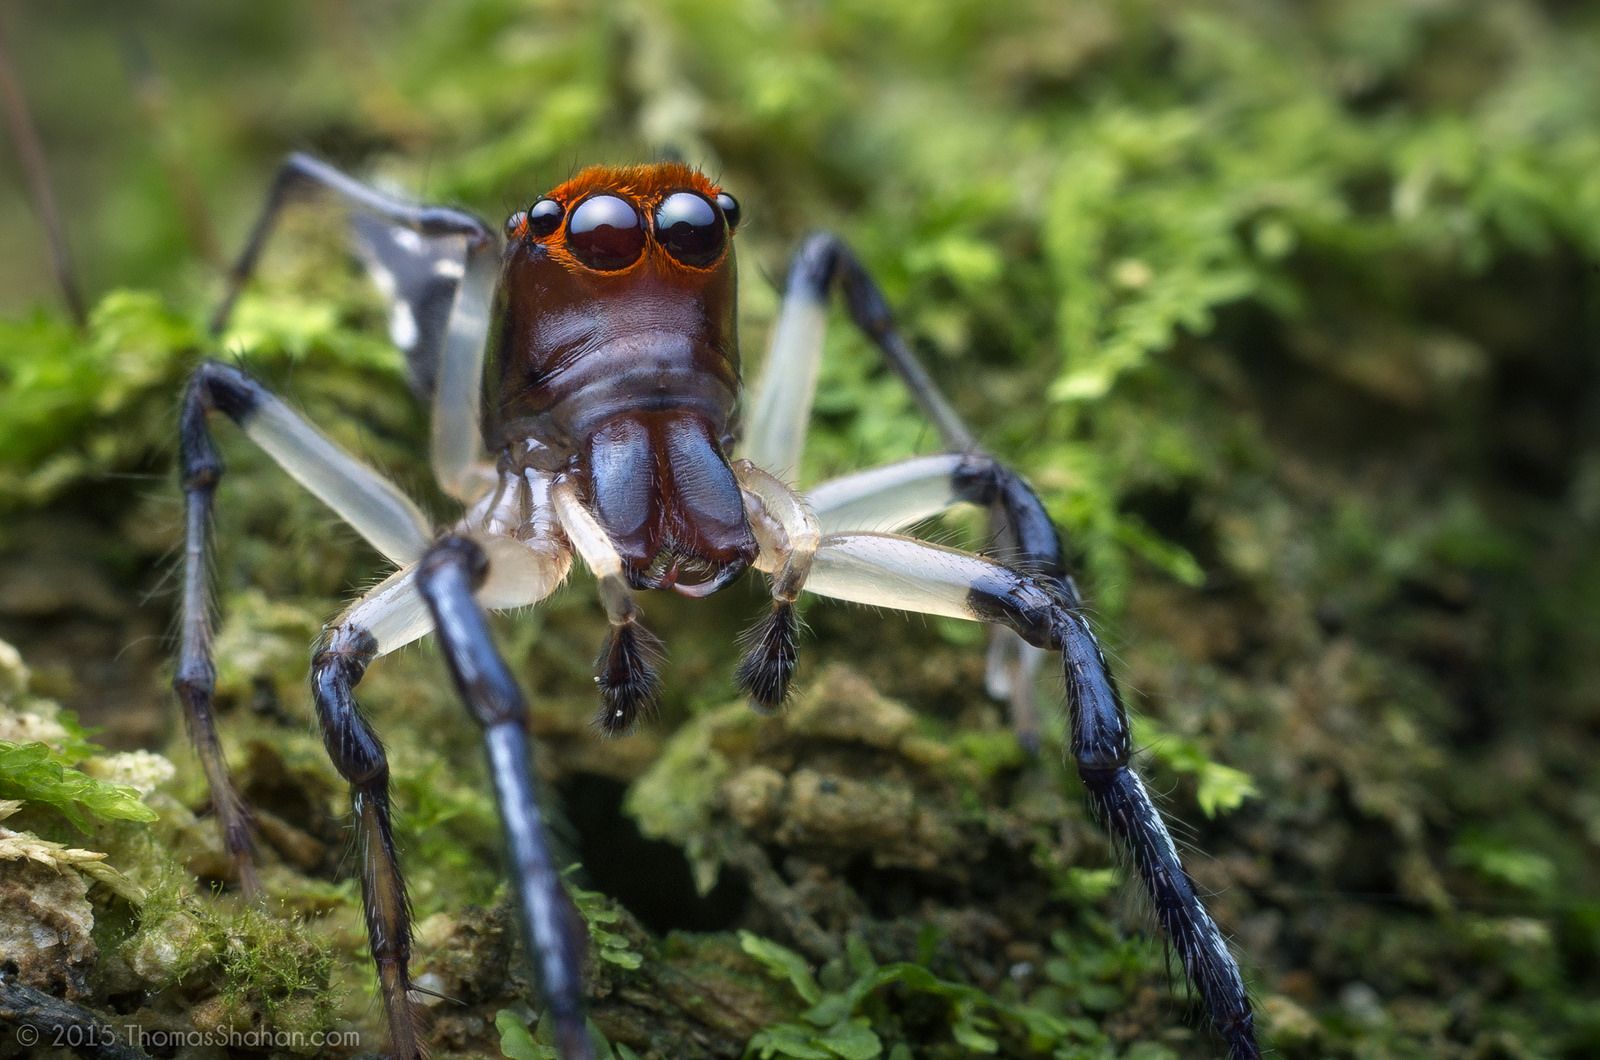 spiders in Belize